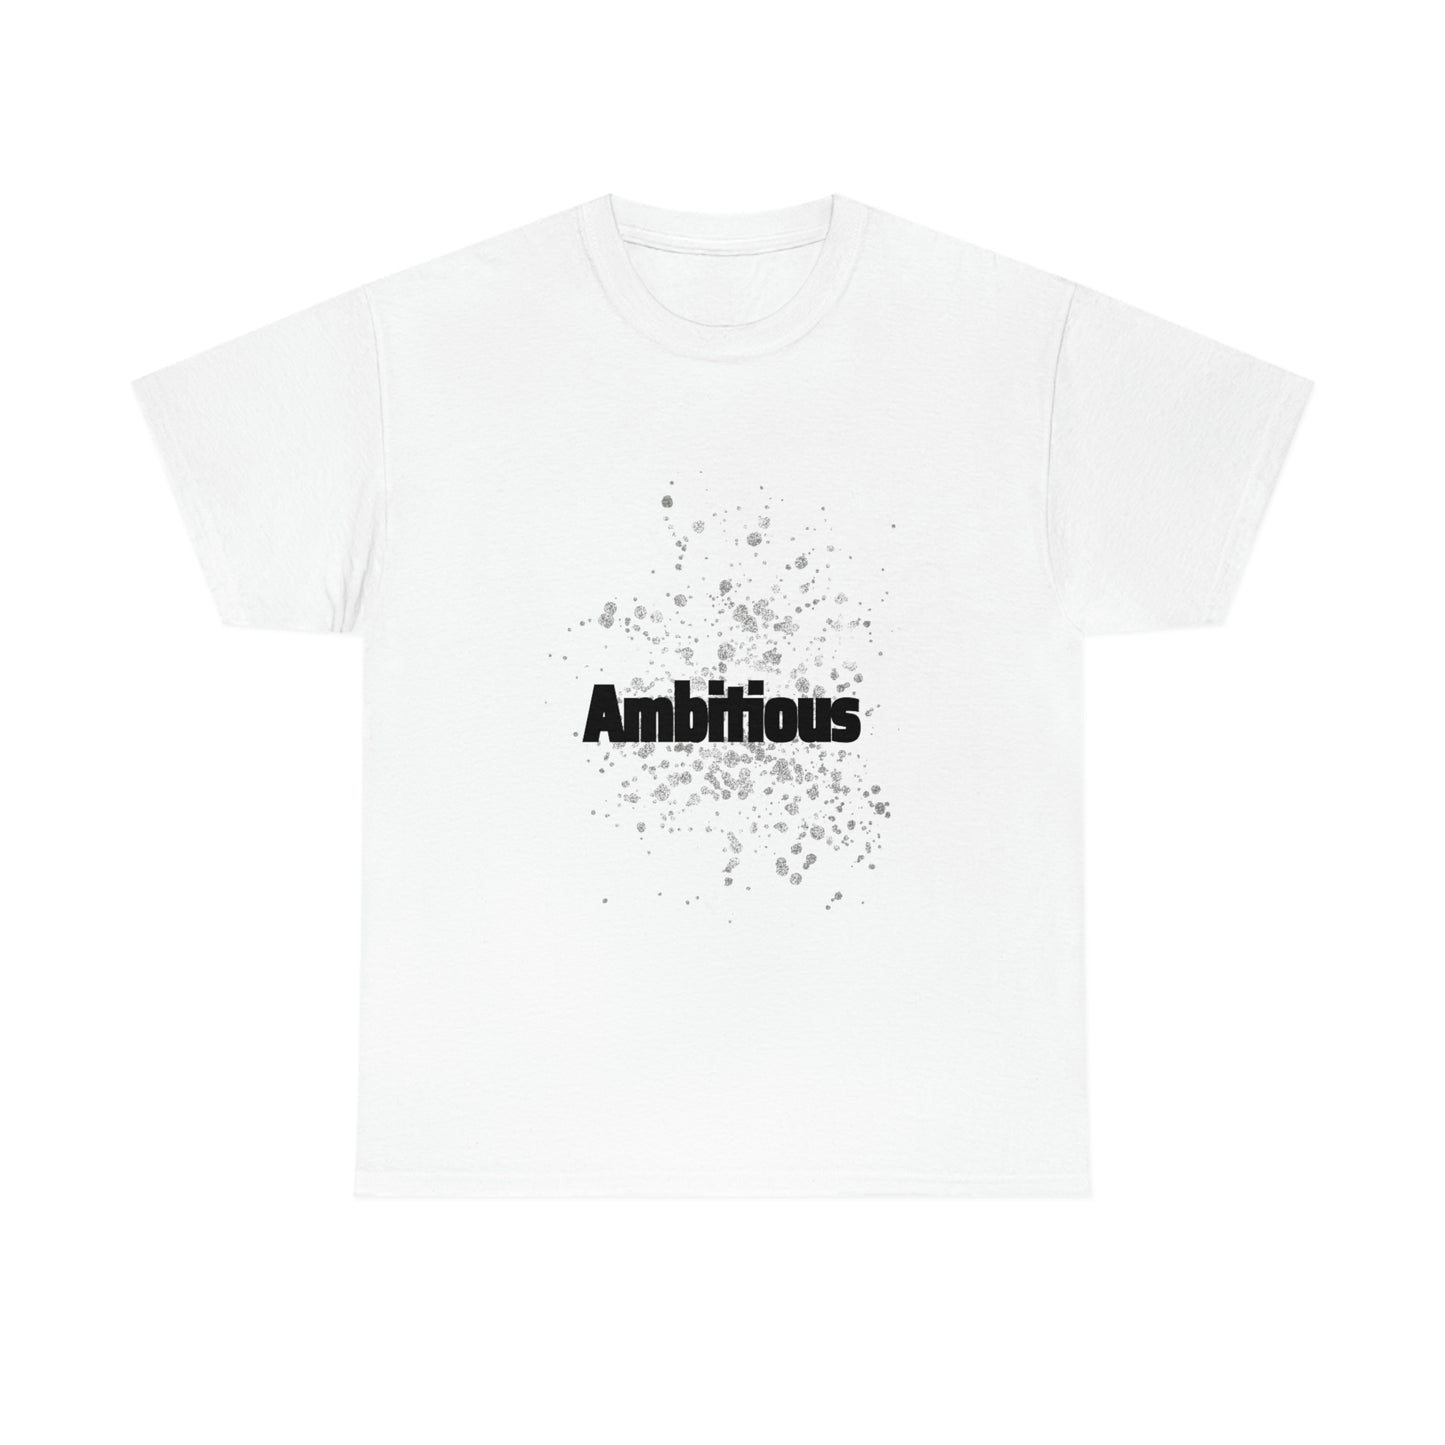 Ambitious T-shirt